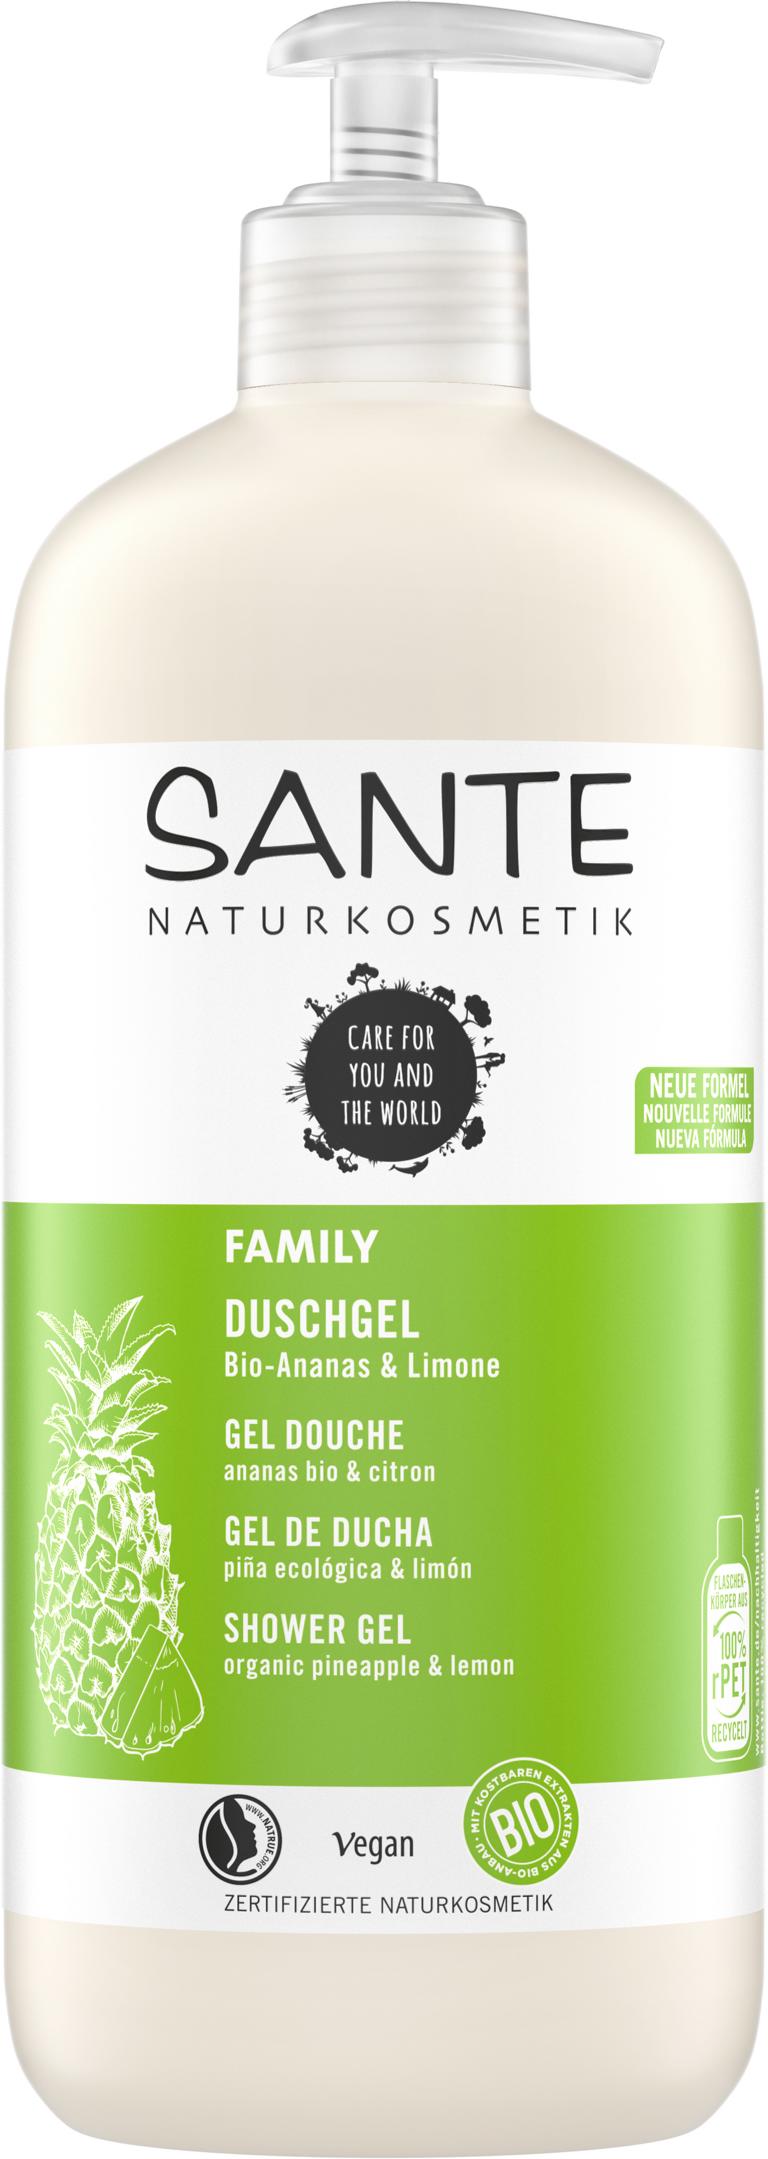 Sante FAMILY Duschgel Bio-Ananas & Limone 500 ml